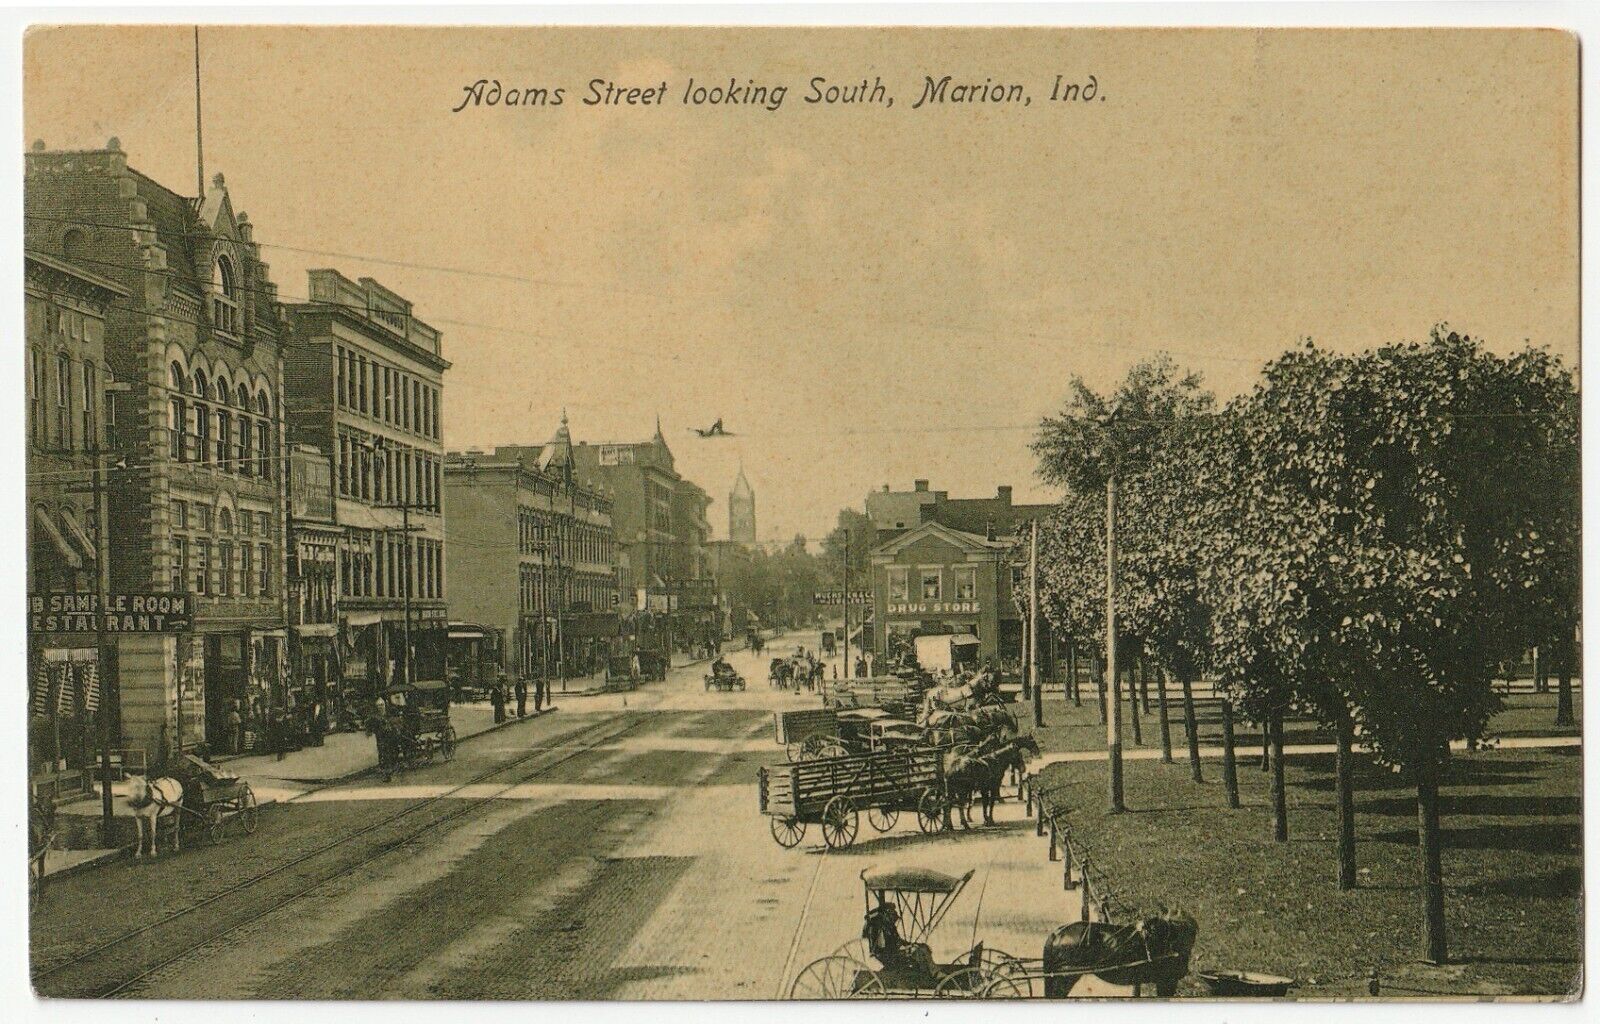 Marion, Indiana - Adams Street Looking South - c1908 postcard